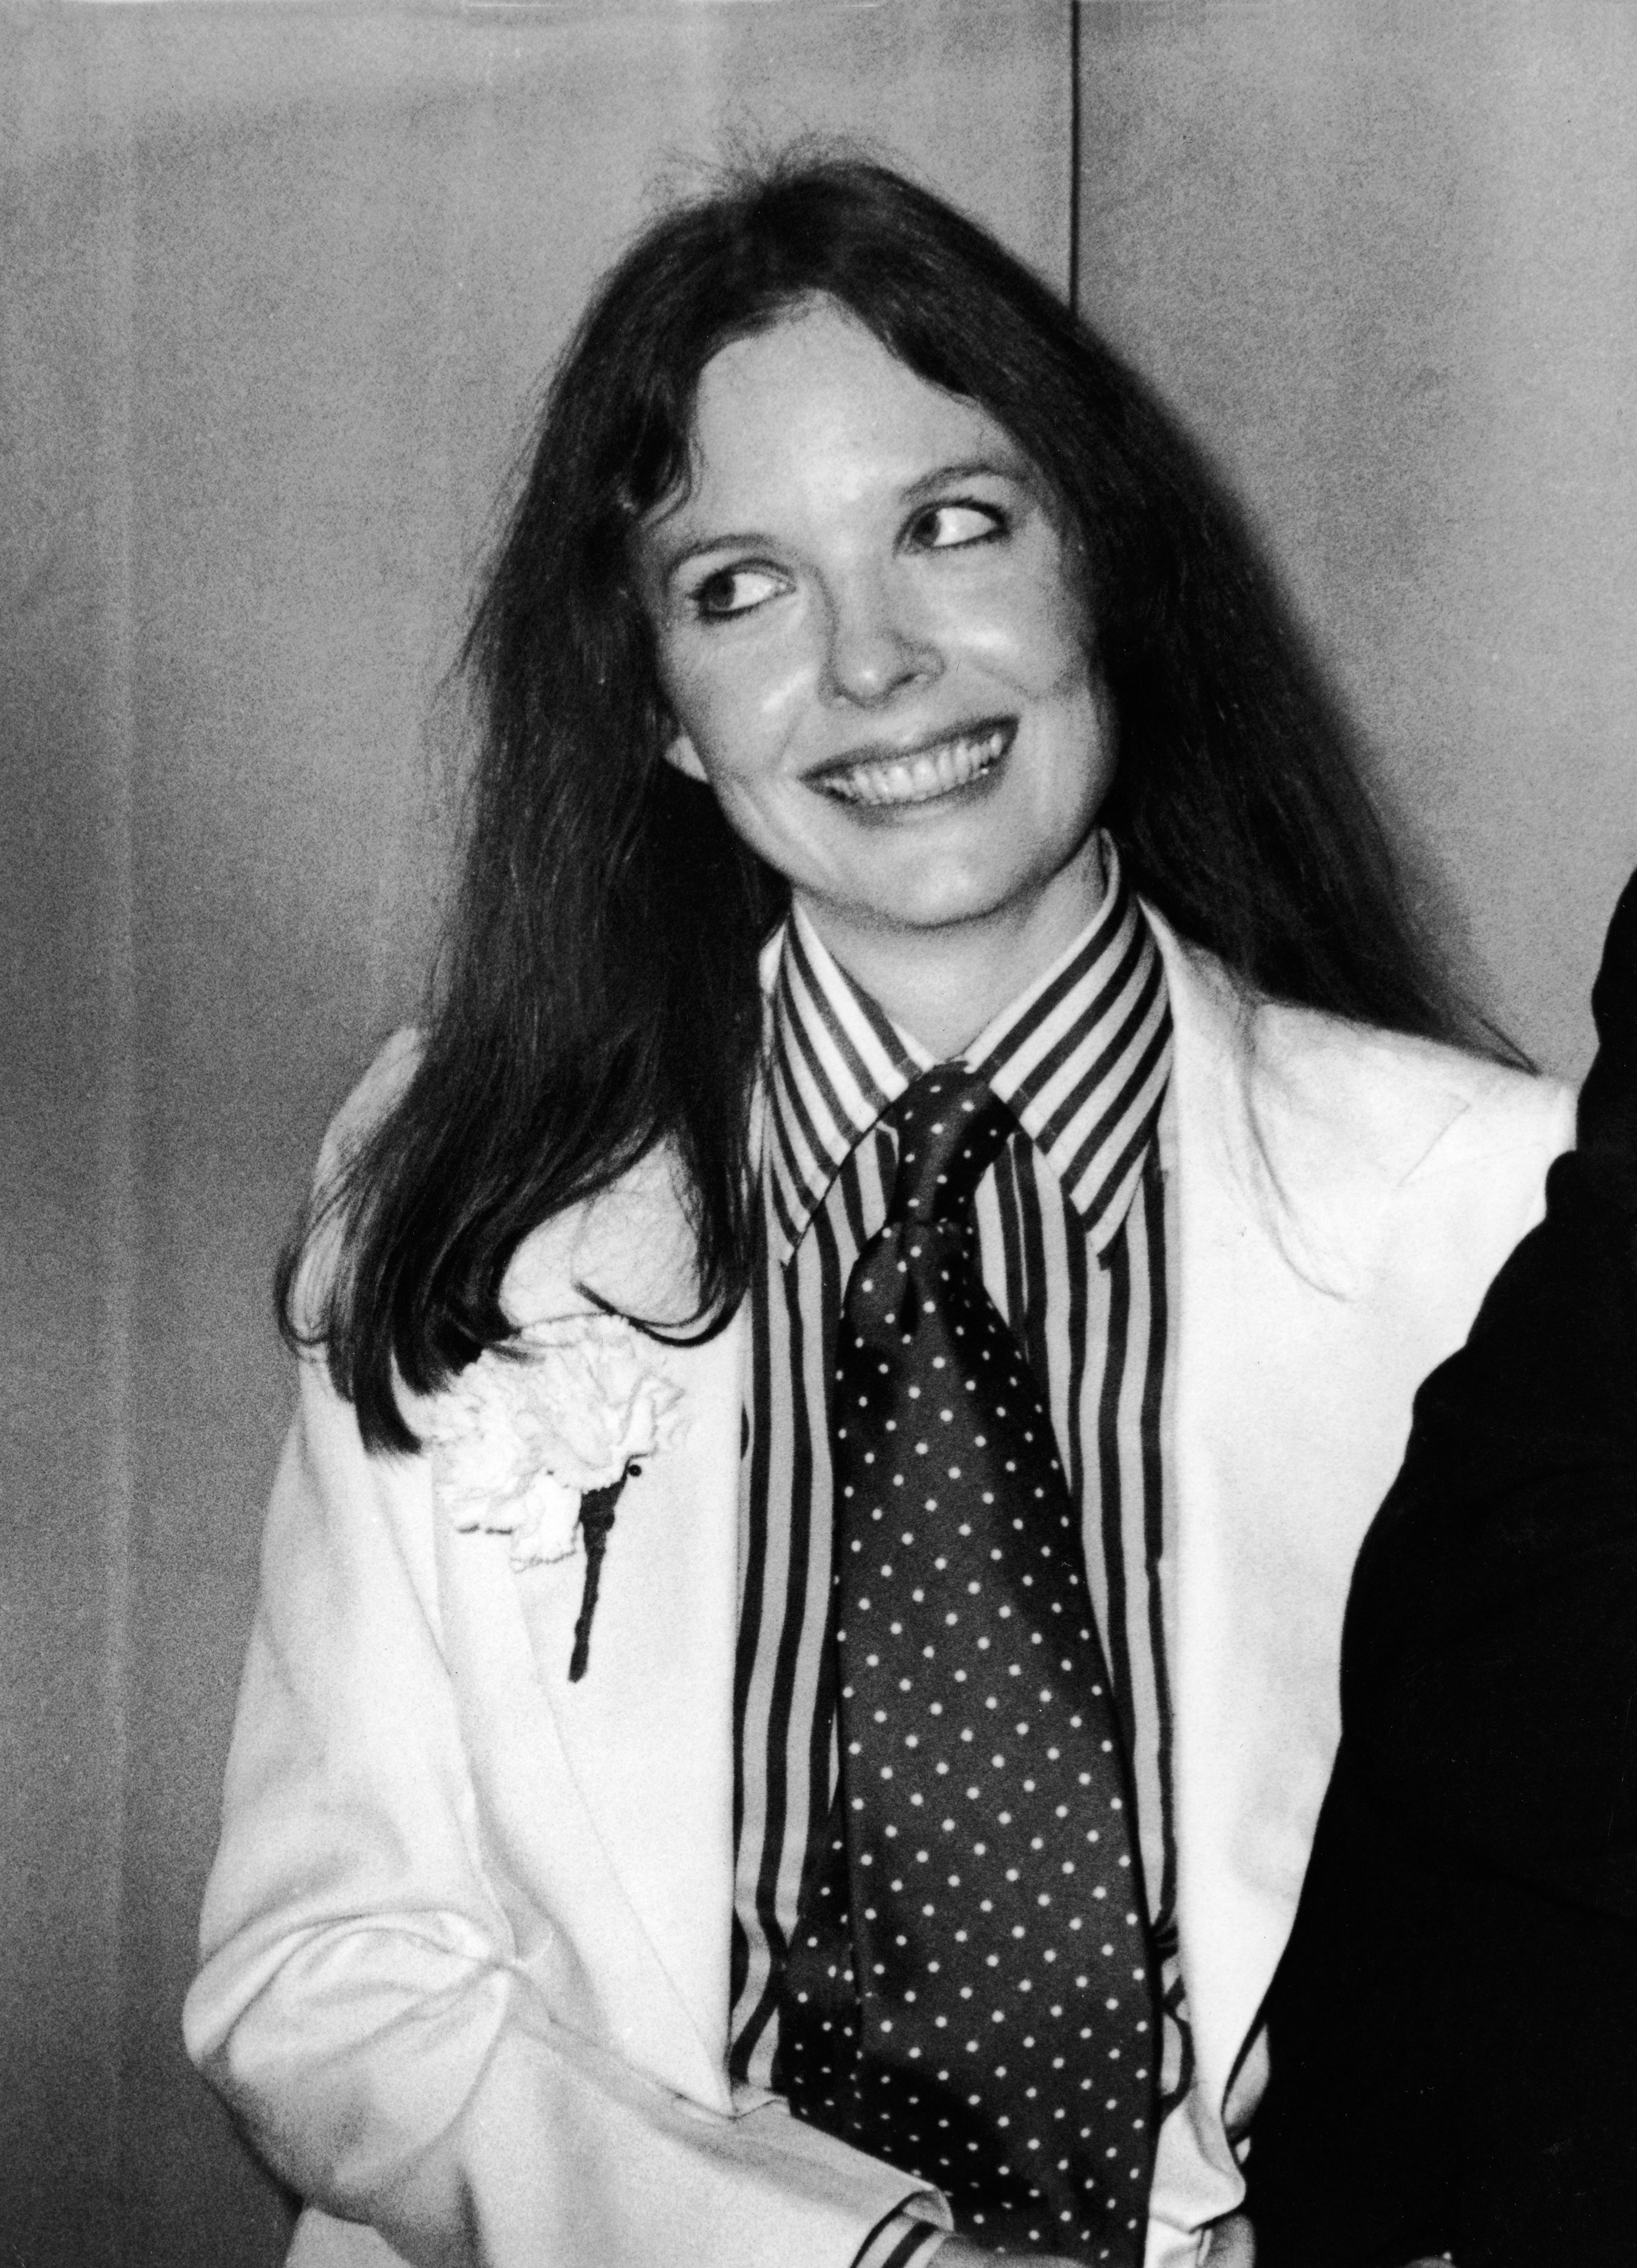 Keaton smiling at the 1976 Oscars